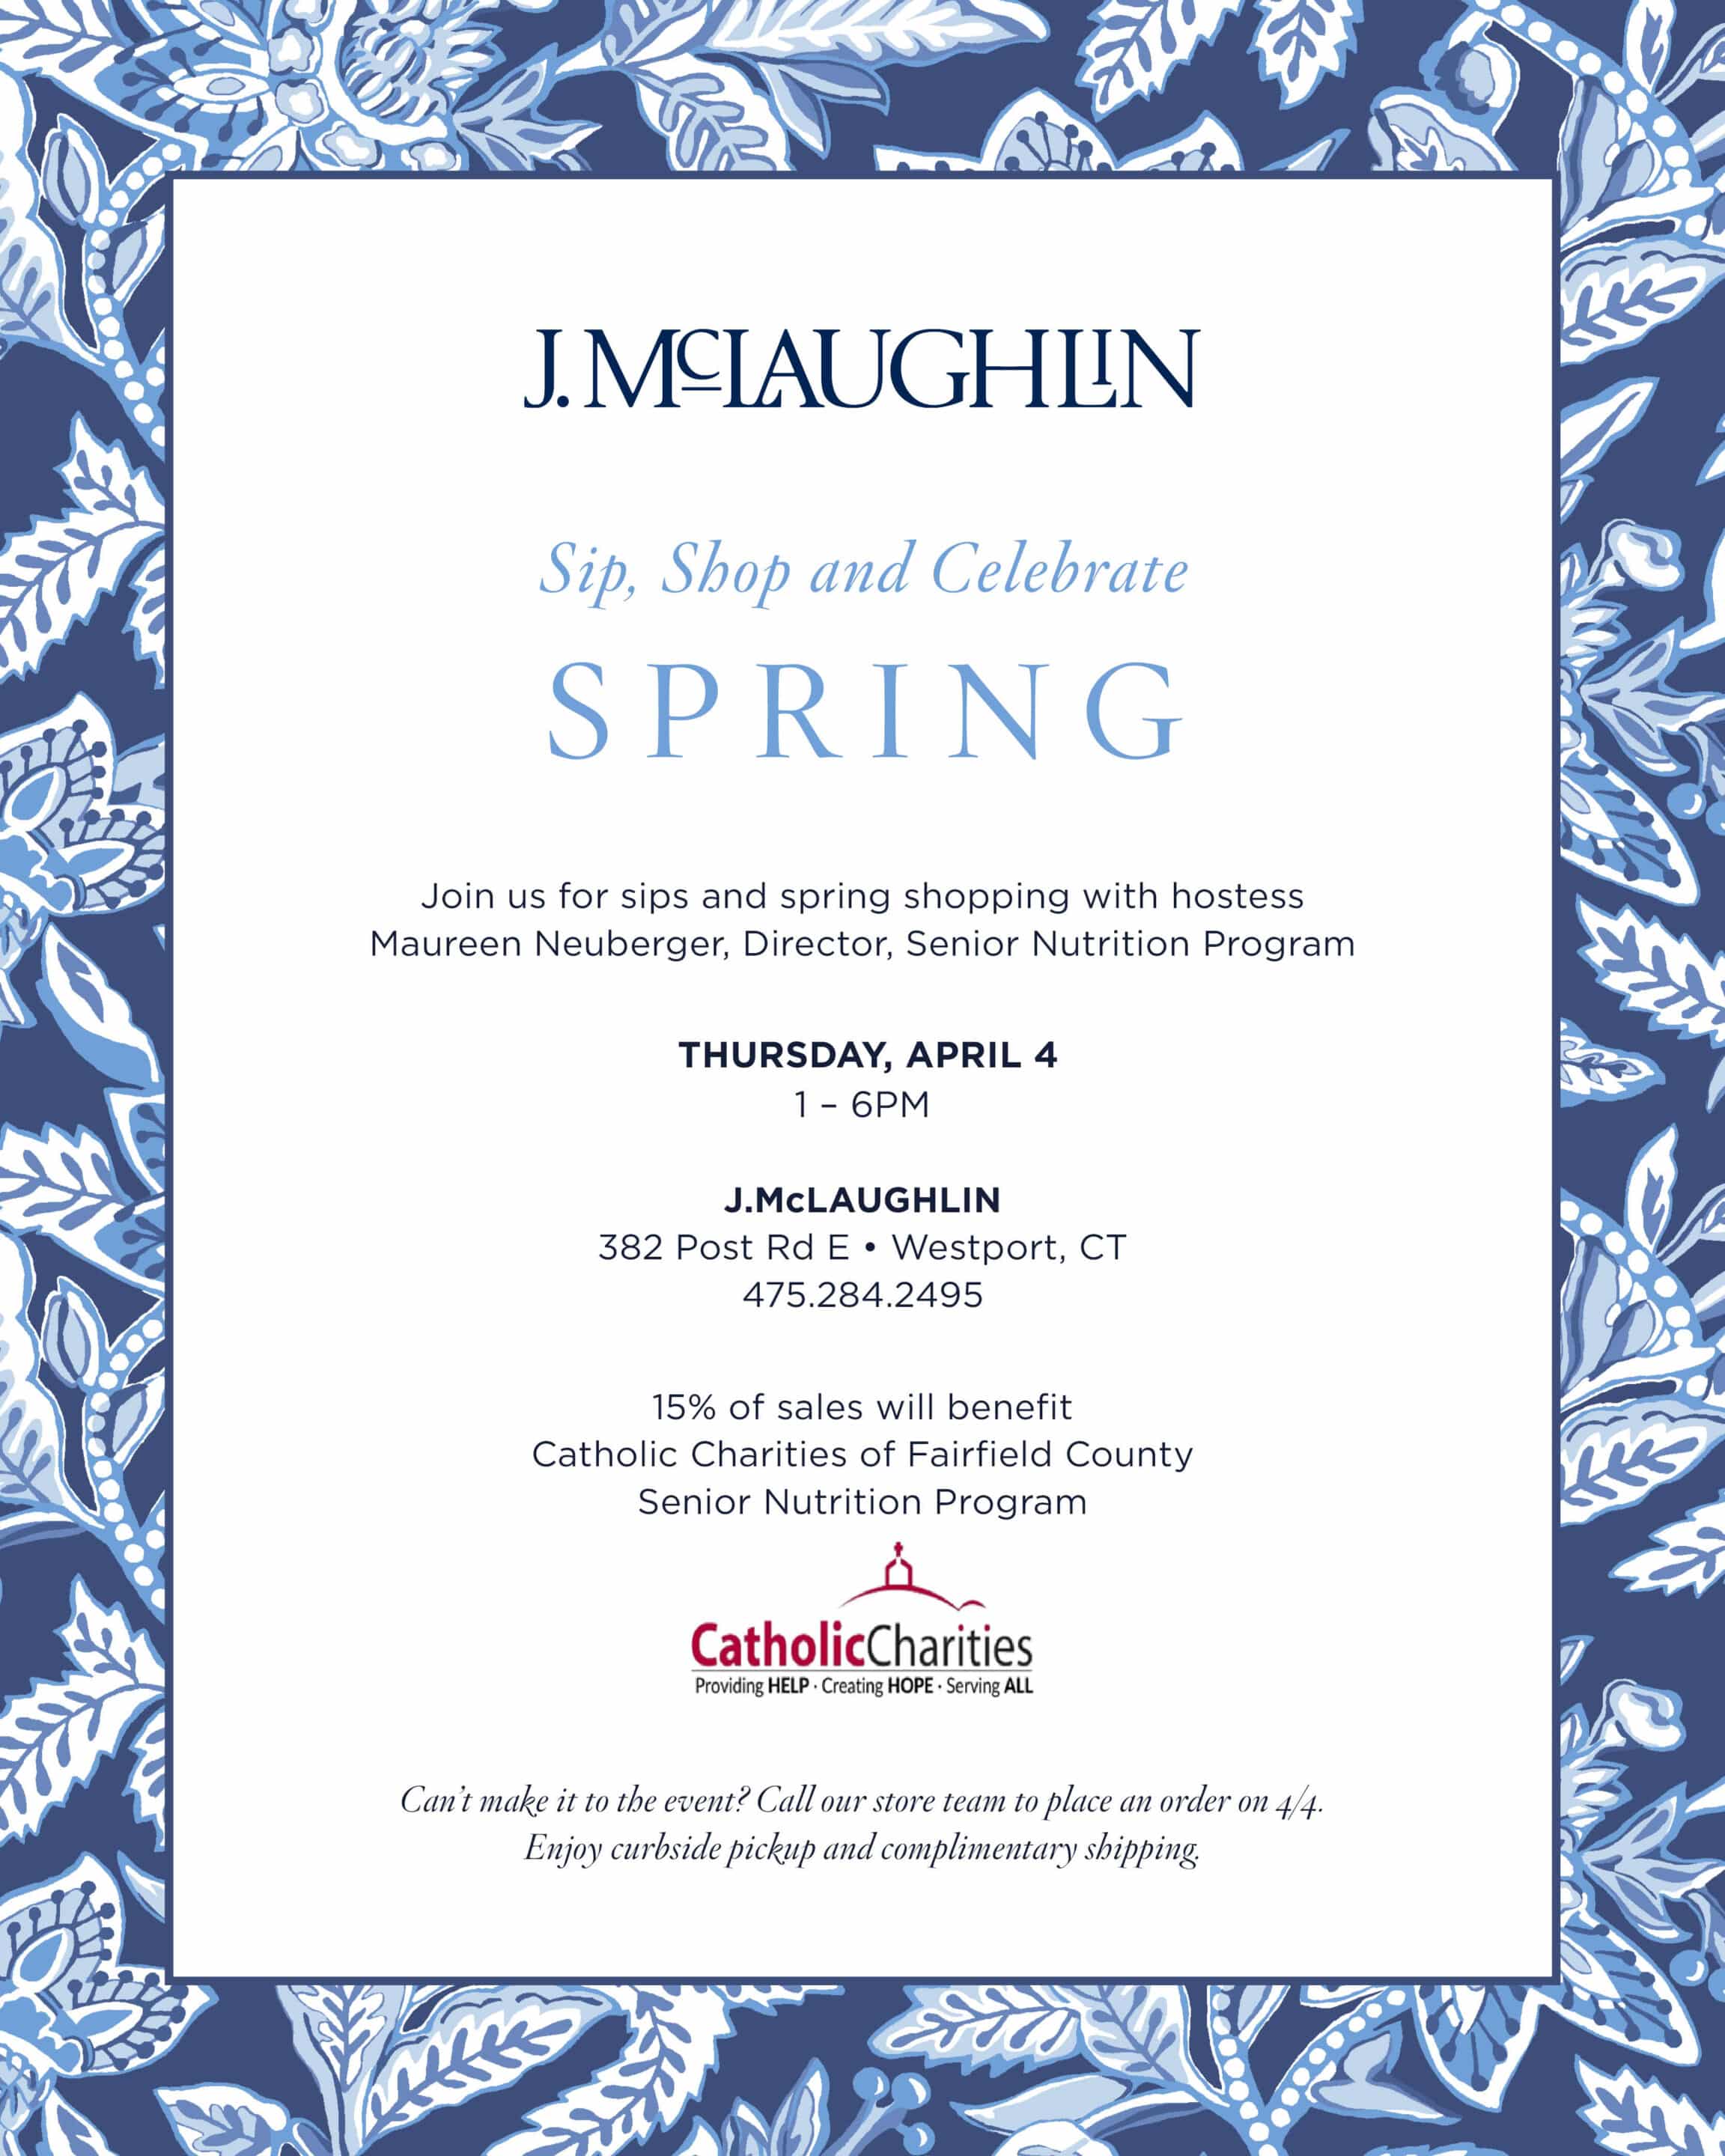 J. McLaughlin event to benefit Senior Nutrition Program on Thursday, April 4th